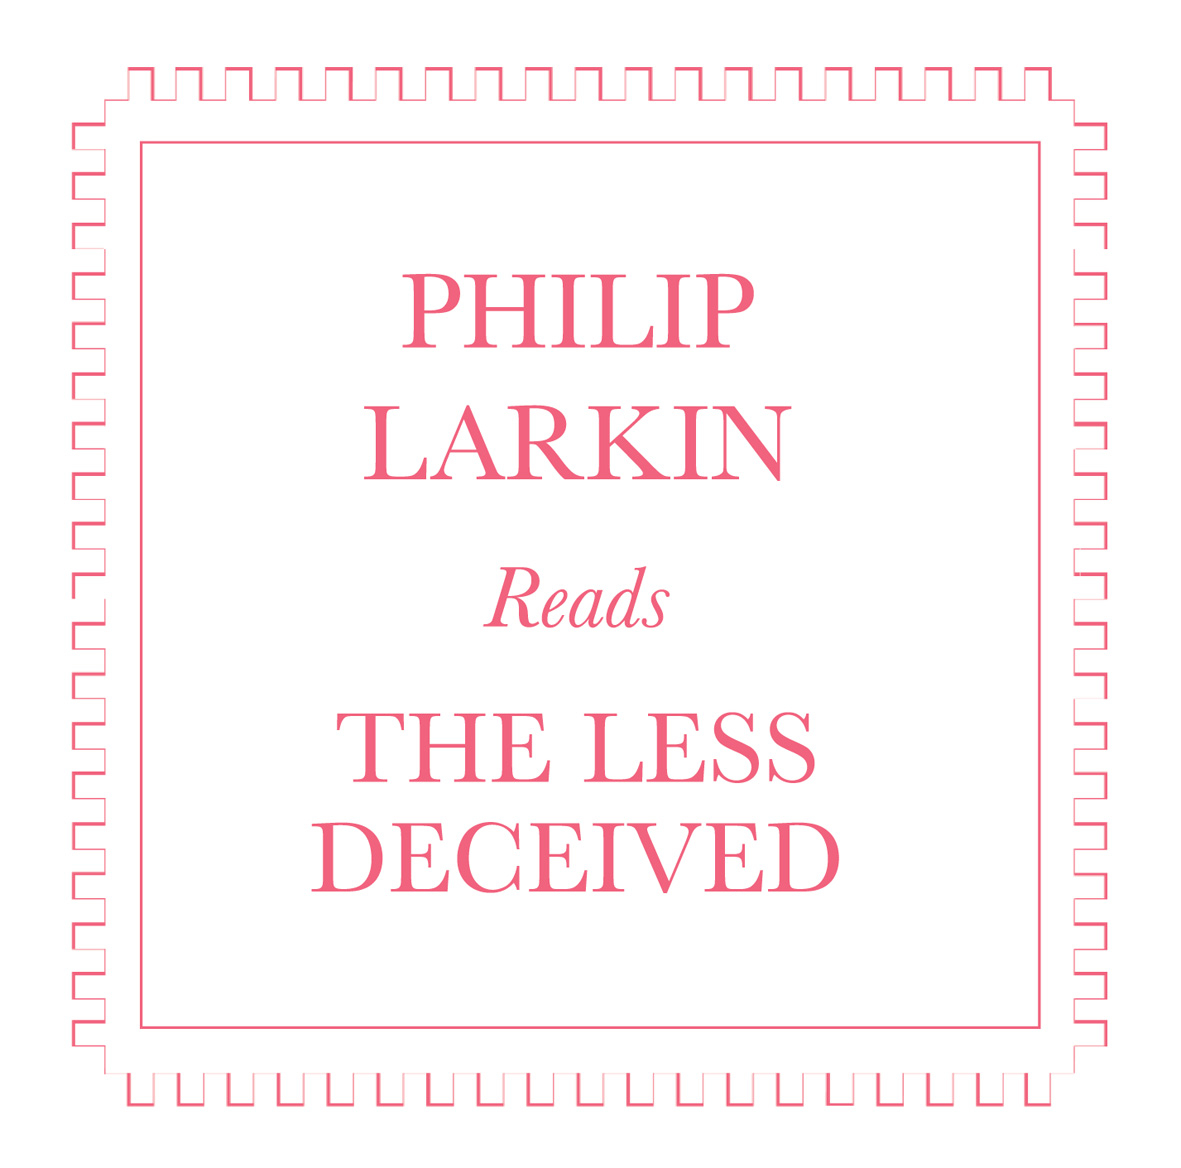 Philip Larkin Reads The Less Decieved